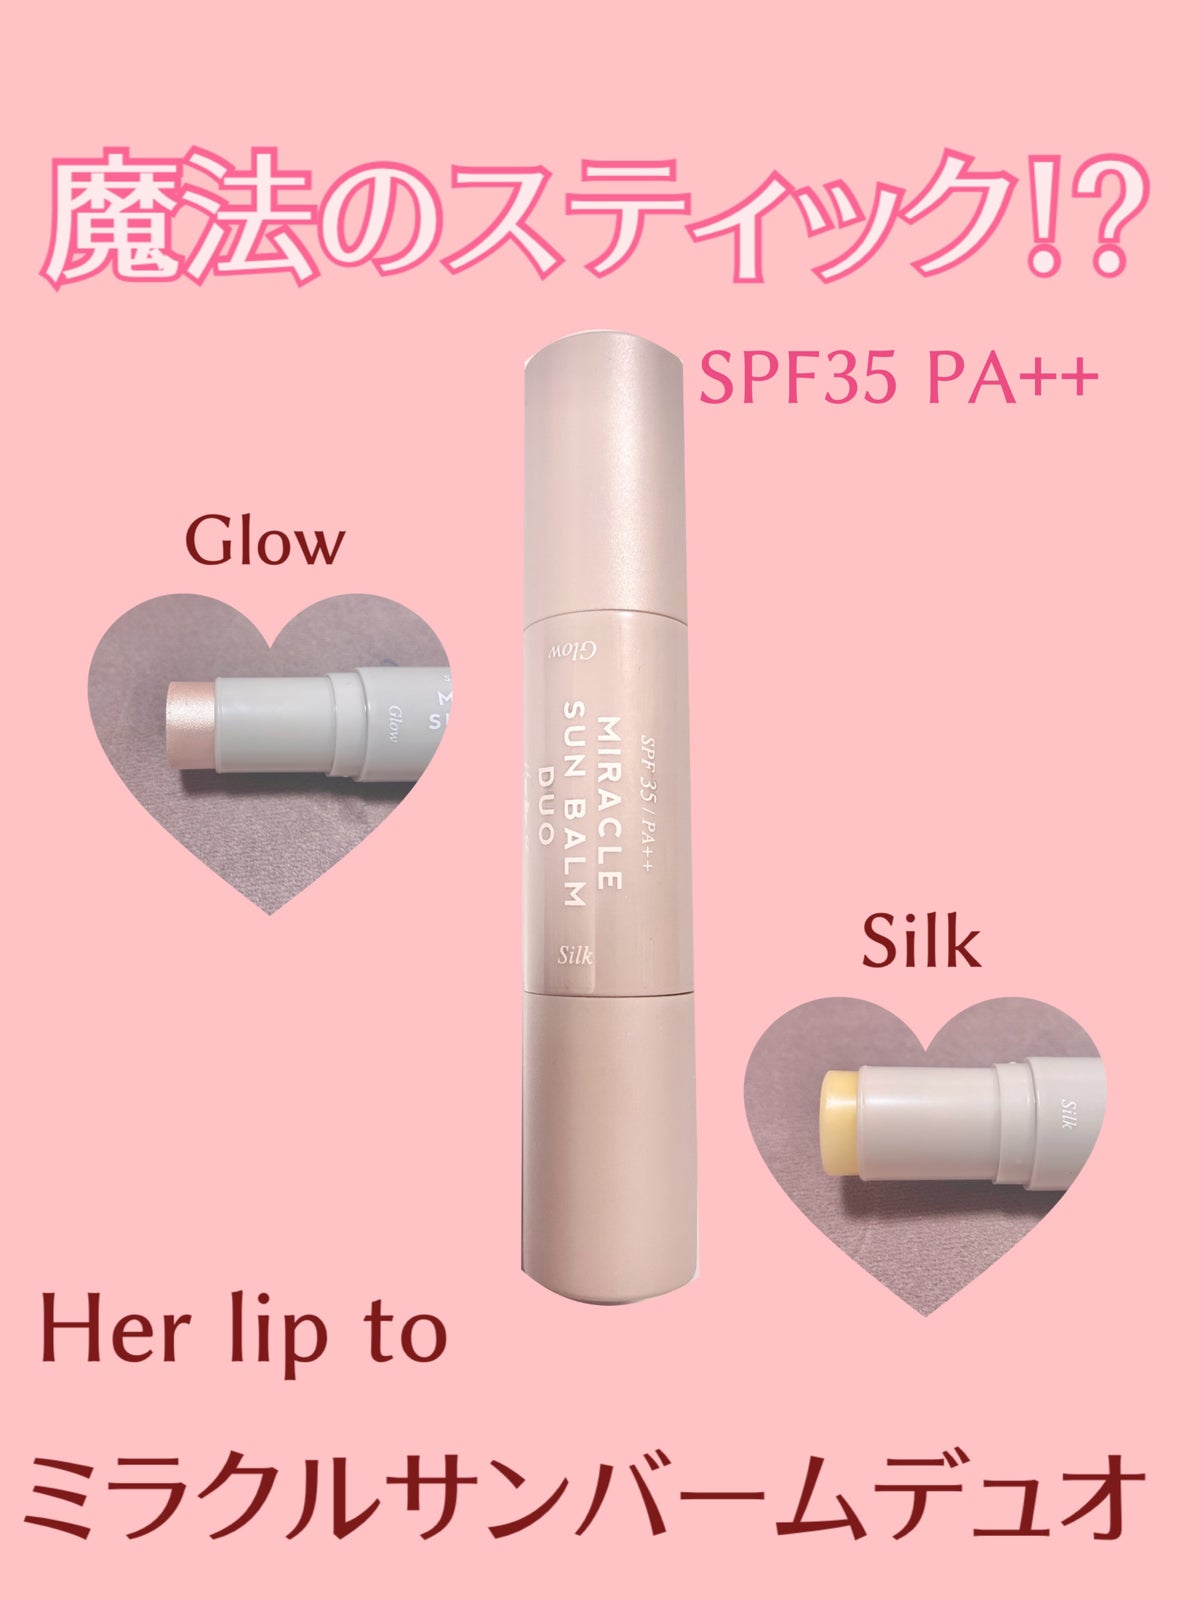 Her lip to シルクビューティー♡